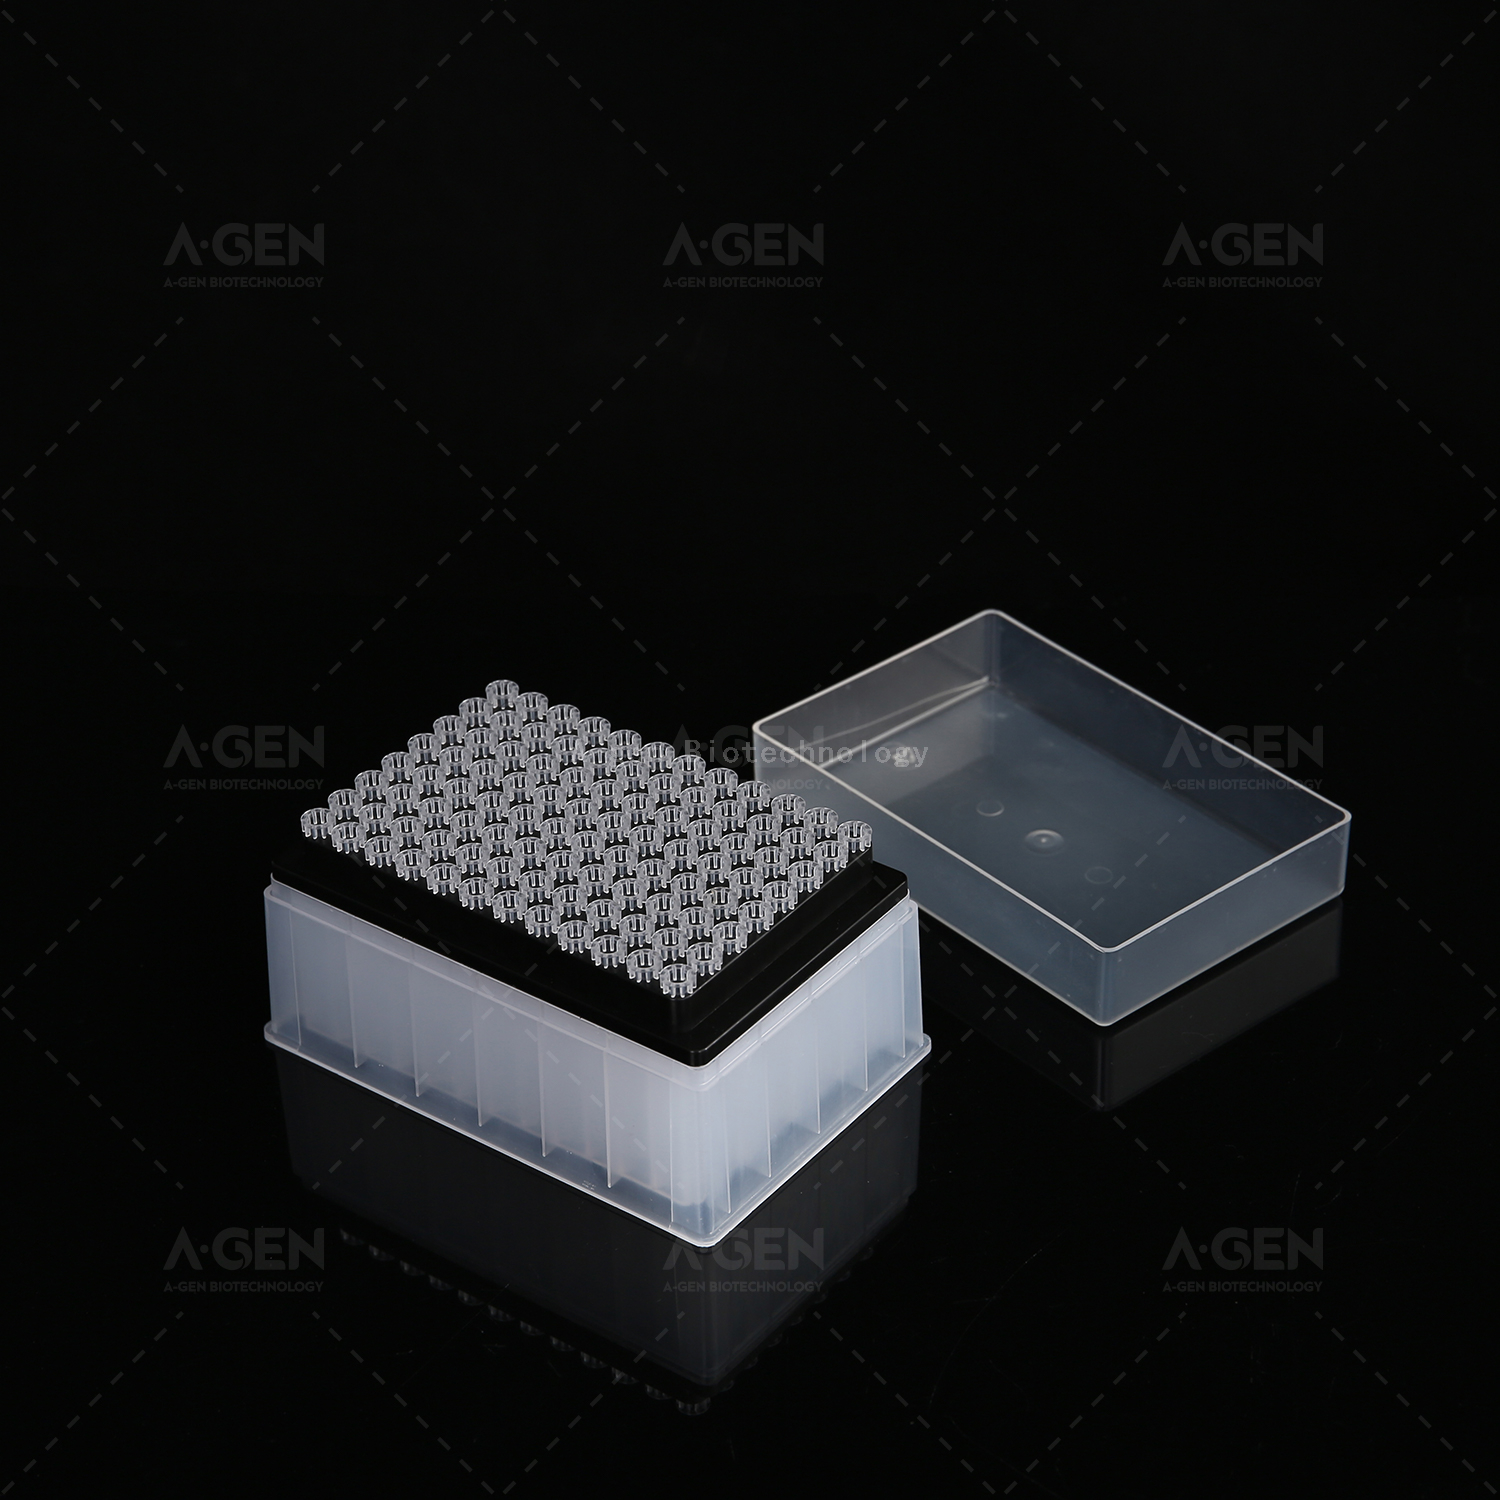 Agilent 250μL Transparent Pipette Tip (Racked,sterilized, Low Retention) for Liquid Transfer VT-250-RSL No Filter